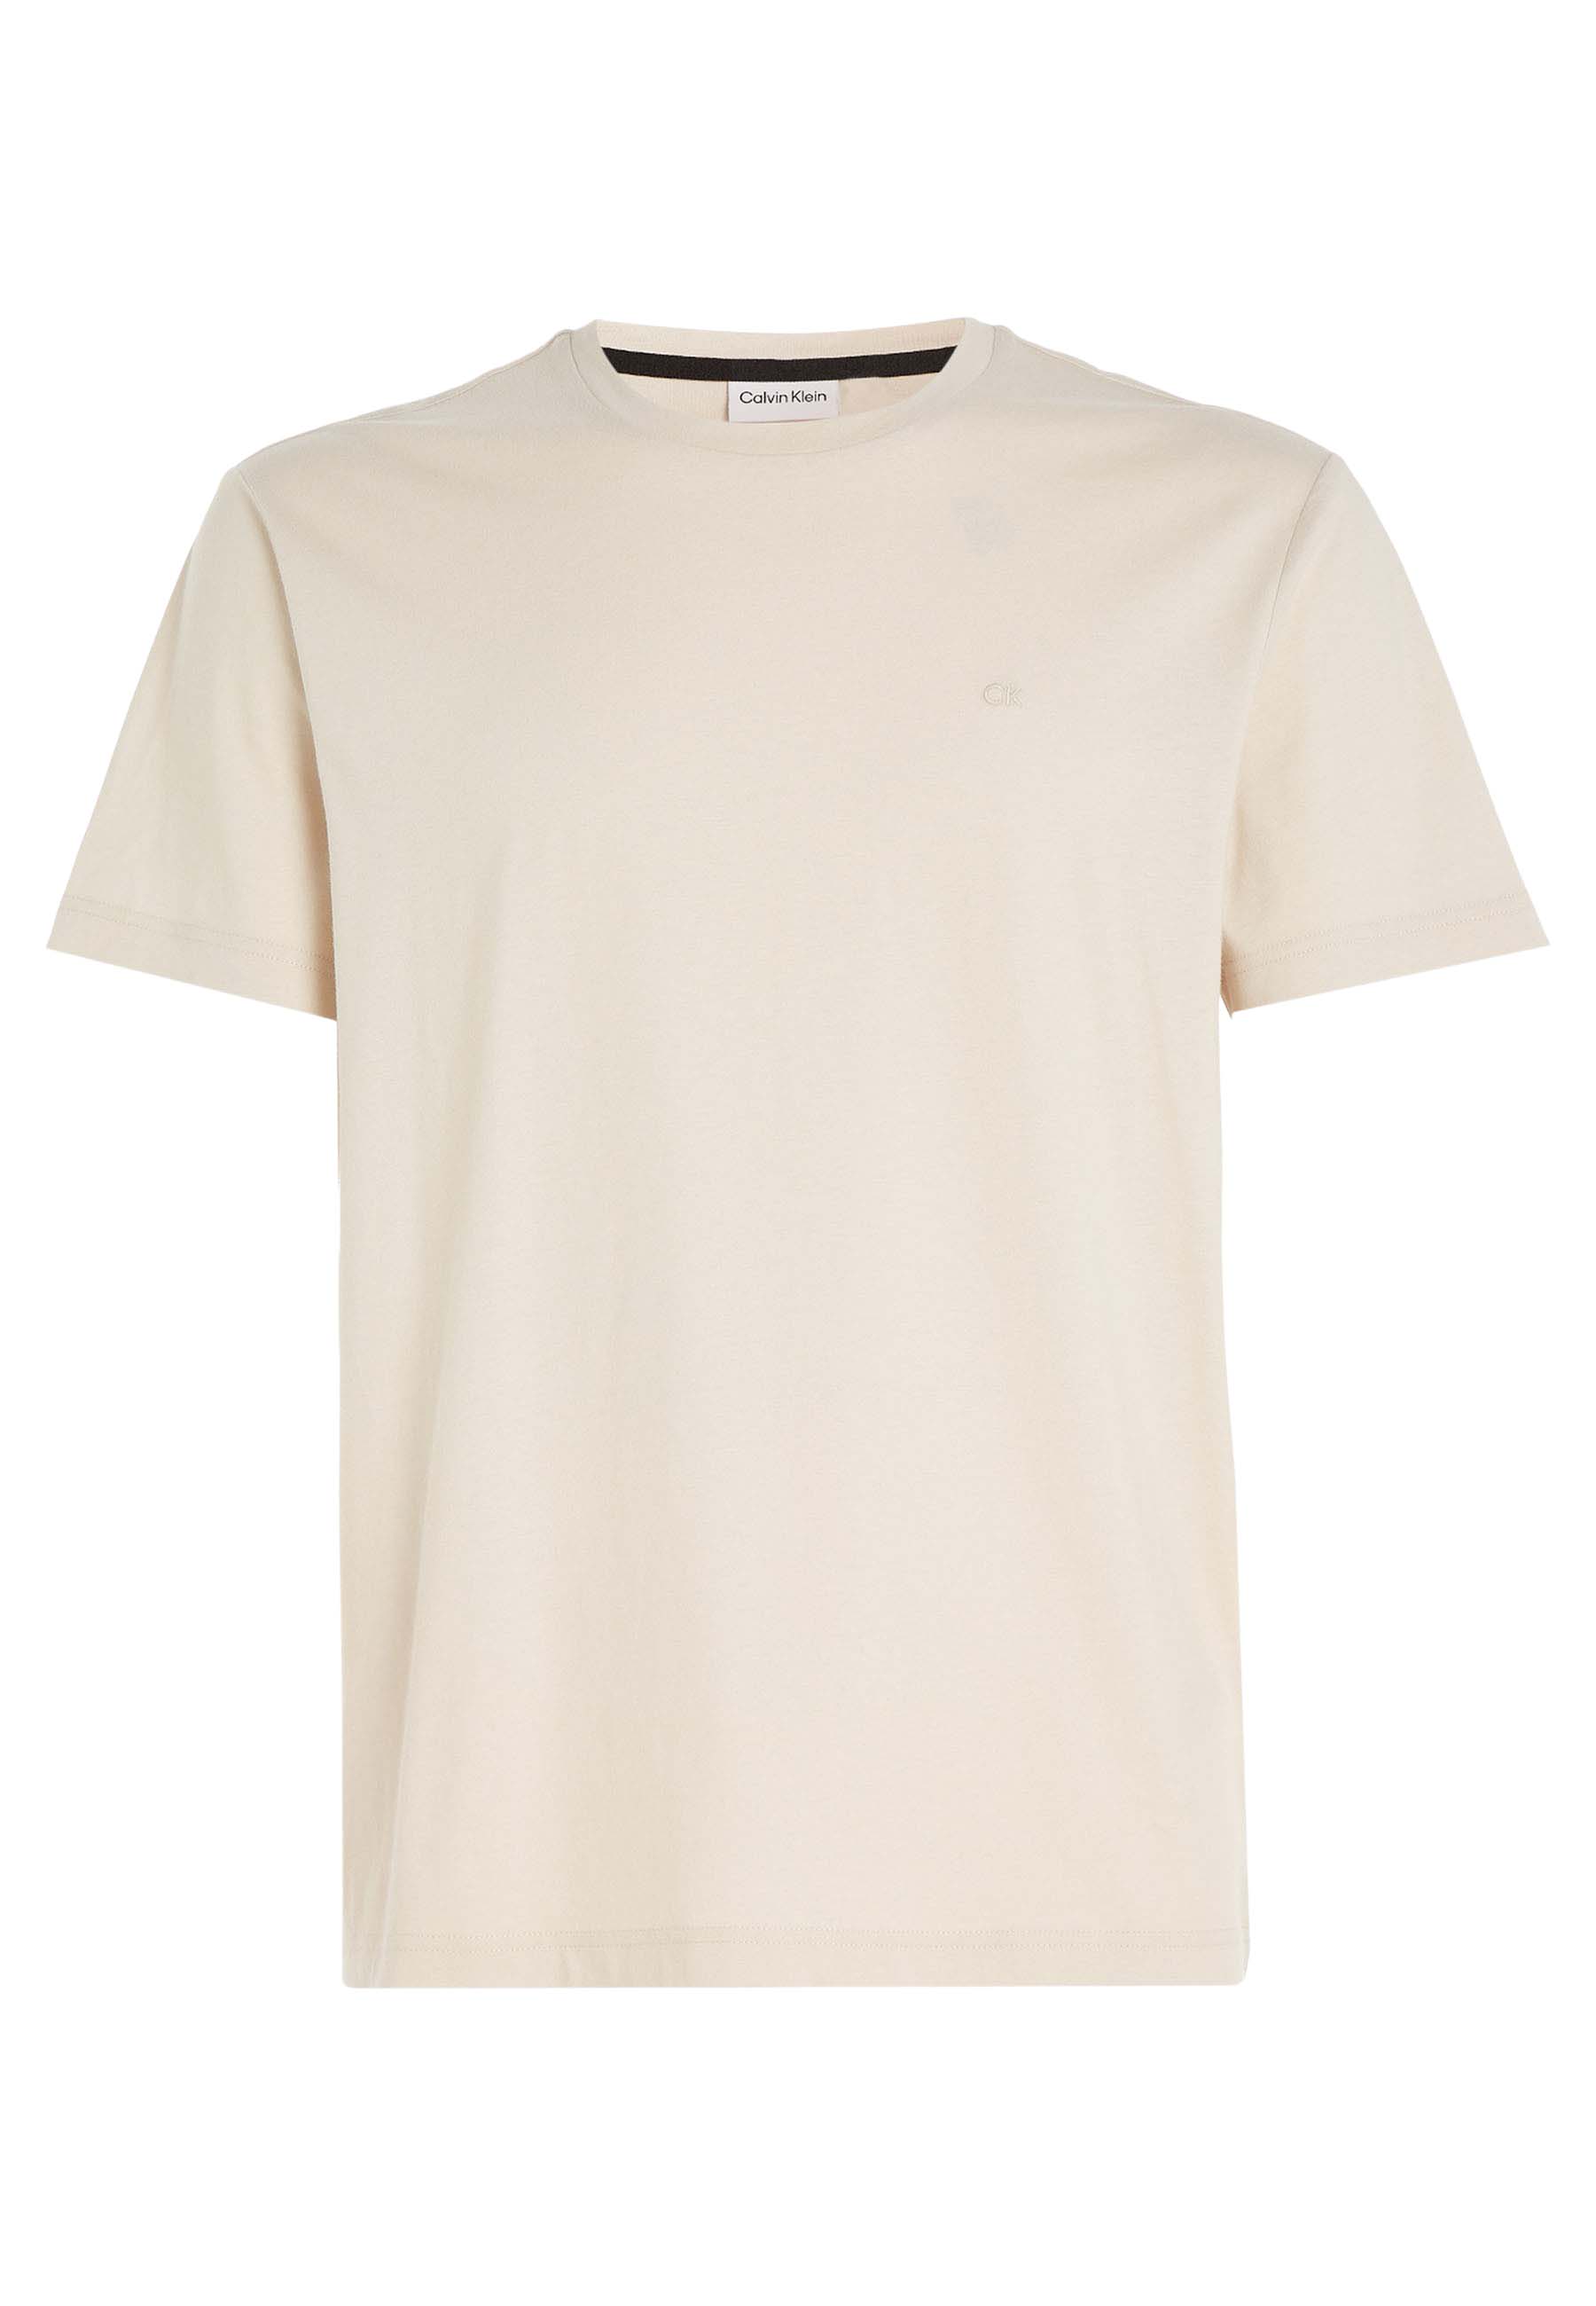 Calvin Klein Shirt Beige Katoen maat XXL t-shirts beige